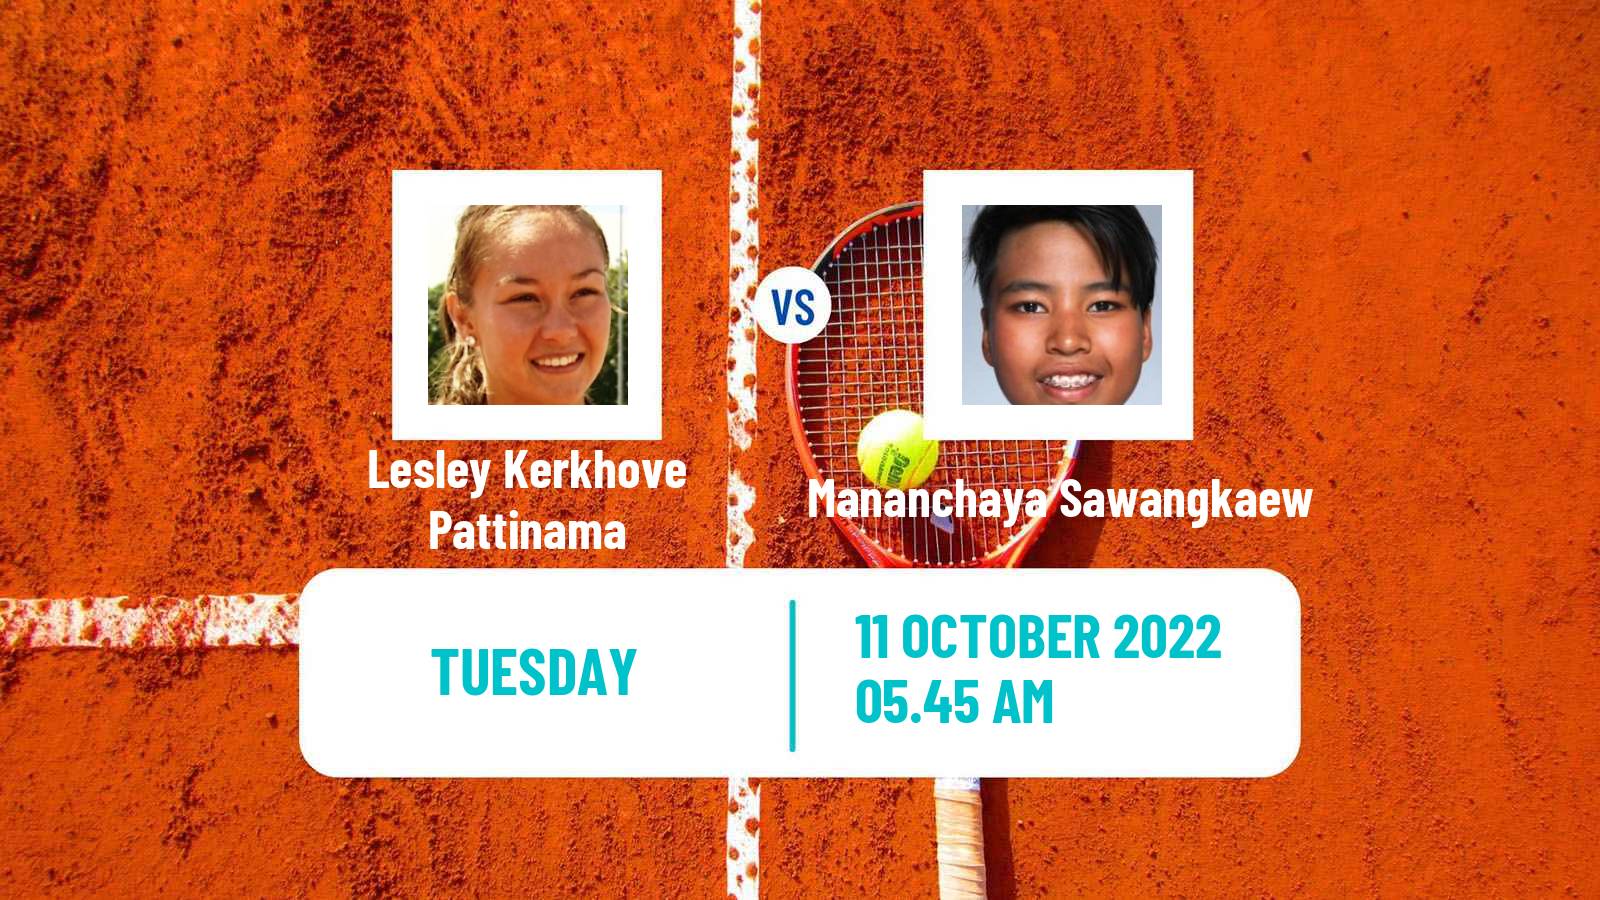 Tennis ITF Tournaments Lesley Kerkhove Pattinama - Mananchaya Sawangkaew